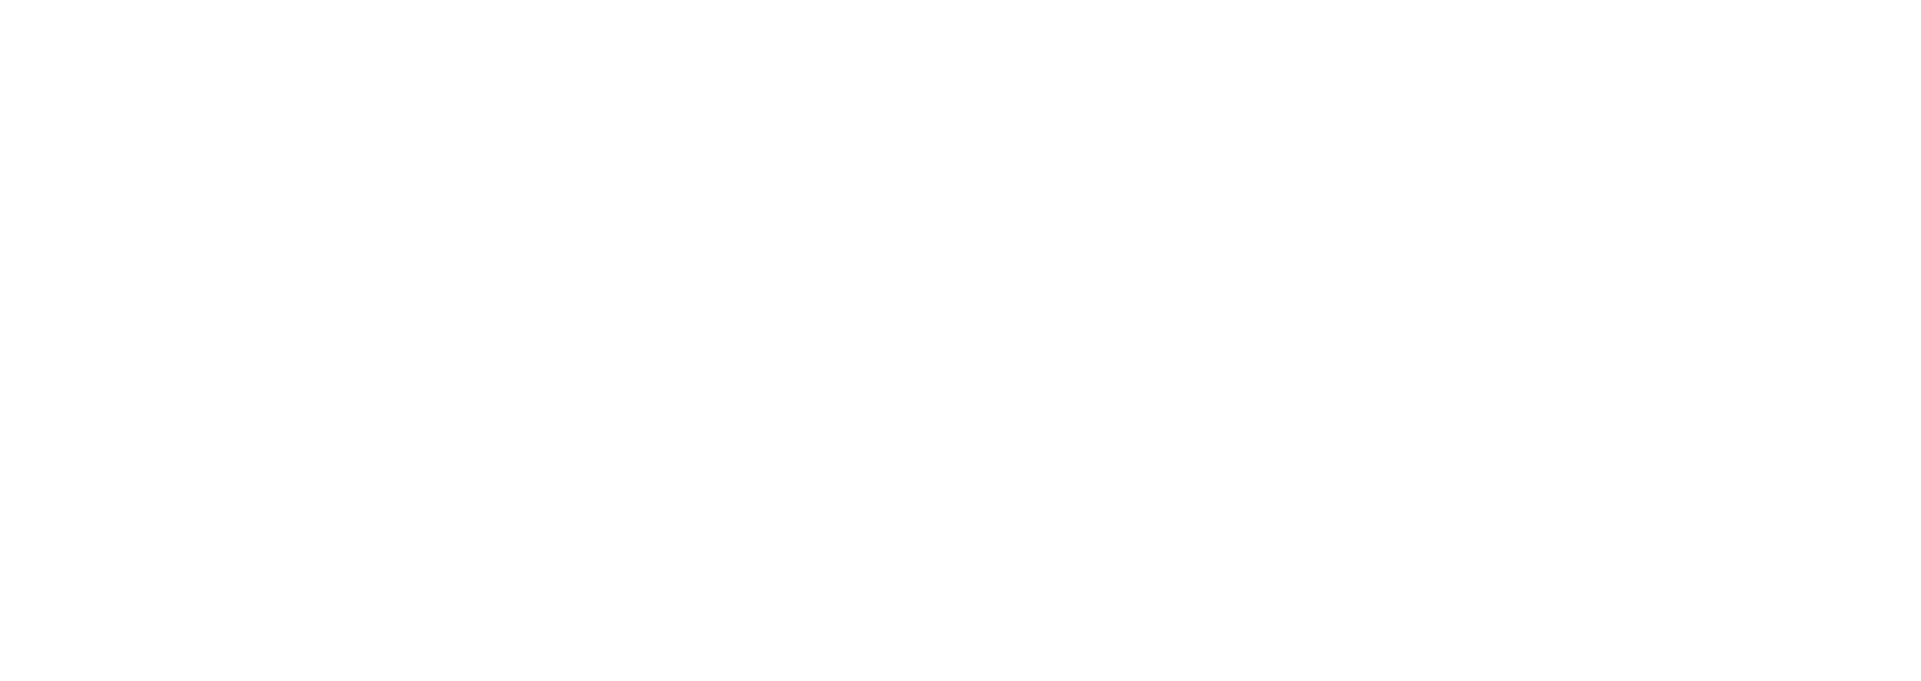 IHG Business Edge